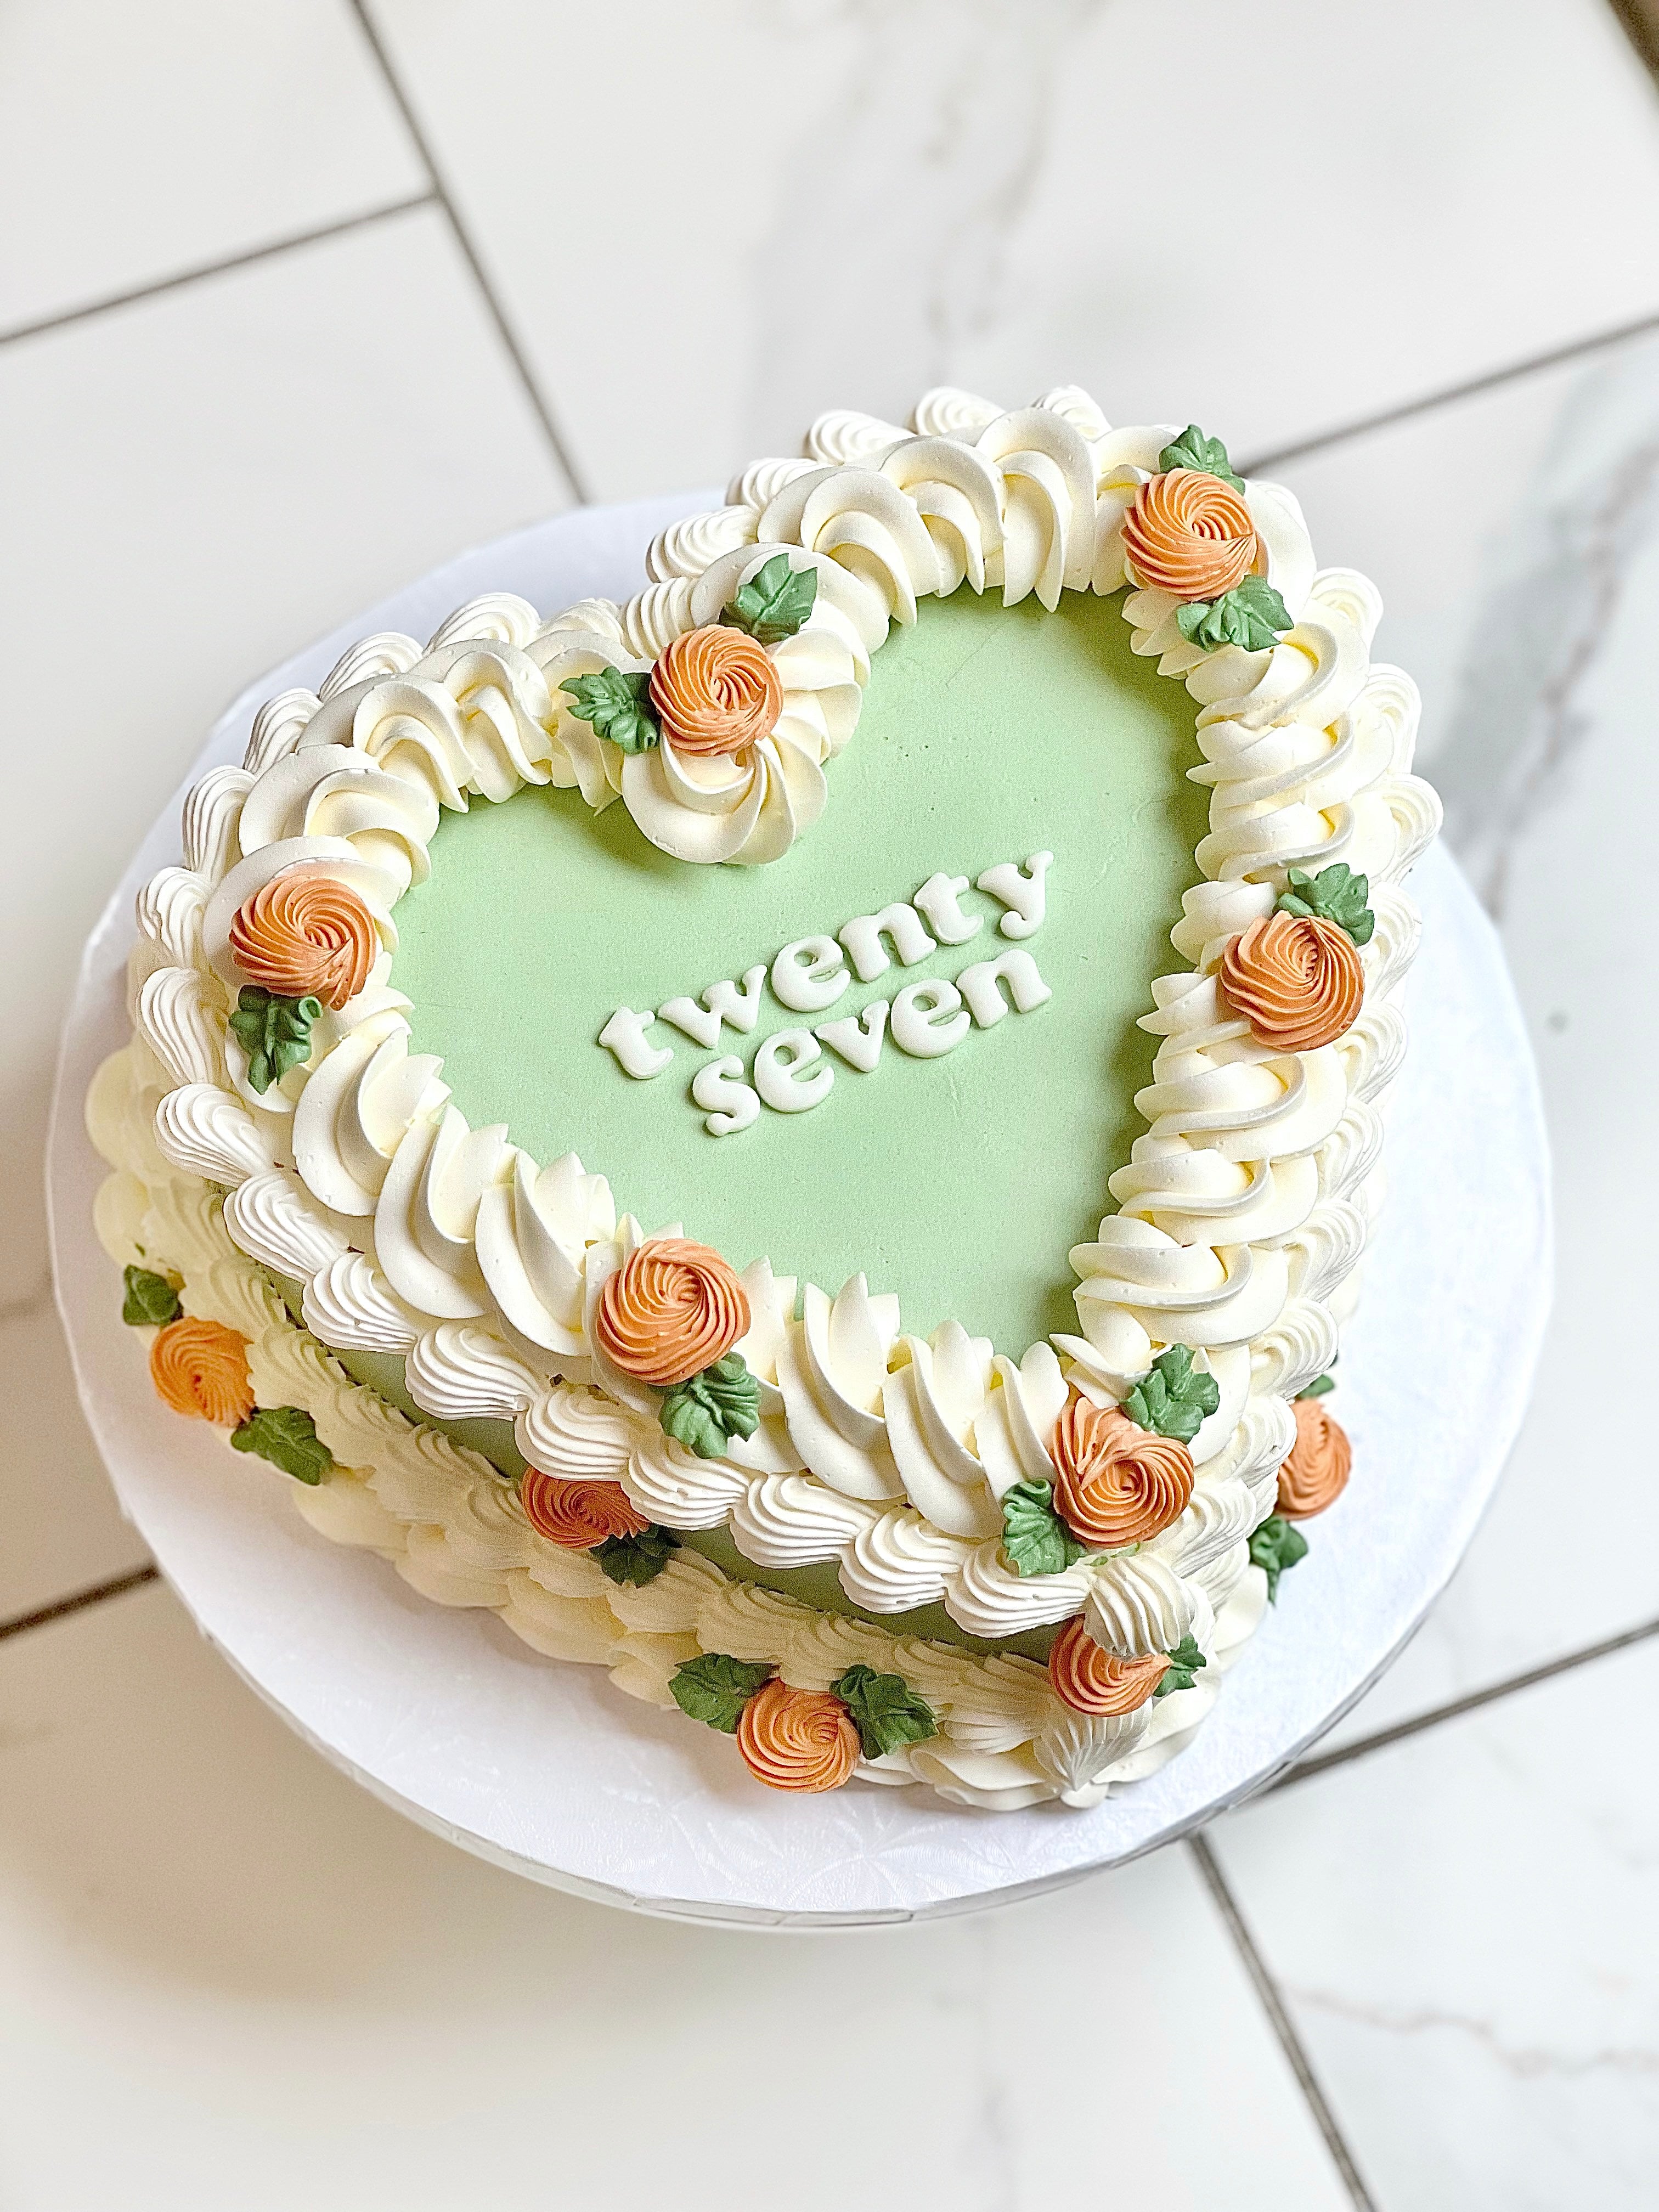 Share more than 144 cake and cream wakad - awesomeenglish.edu.vn